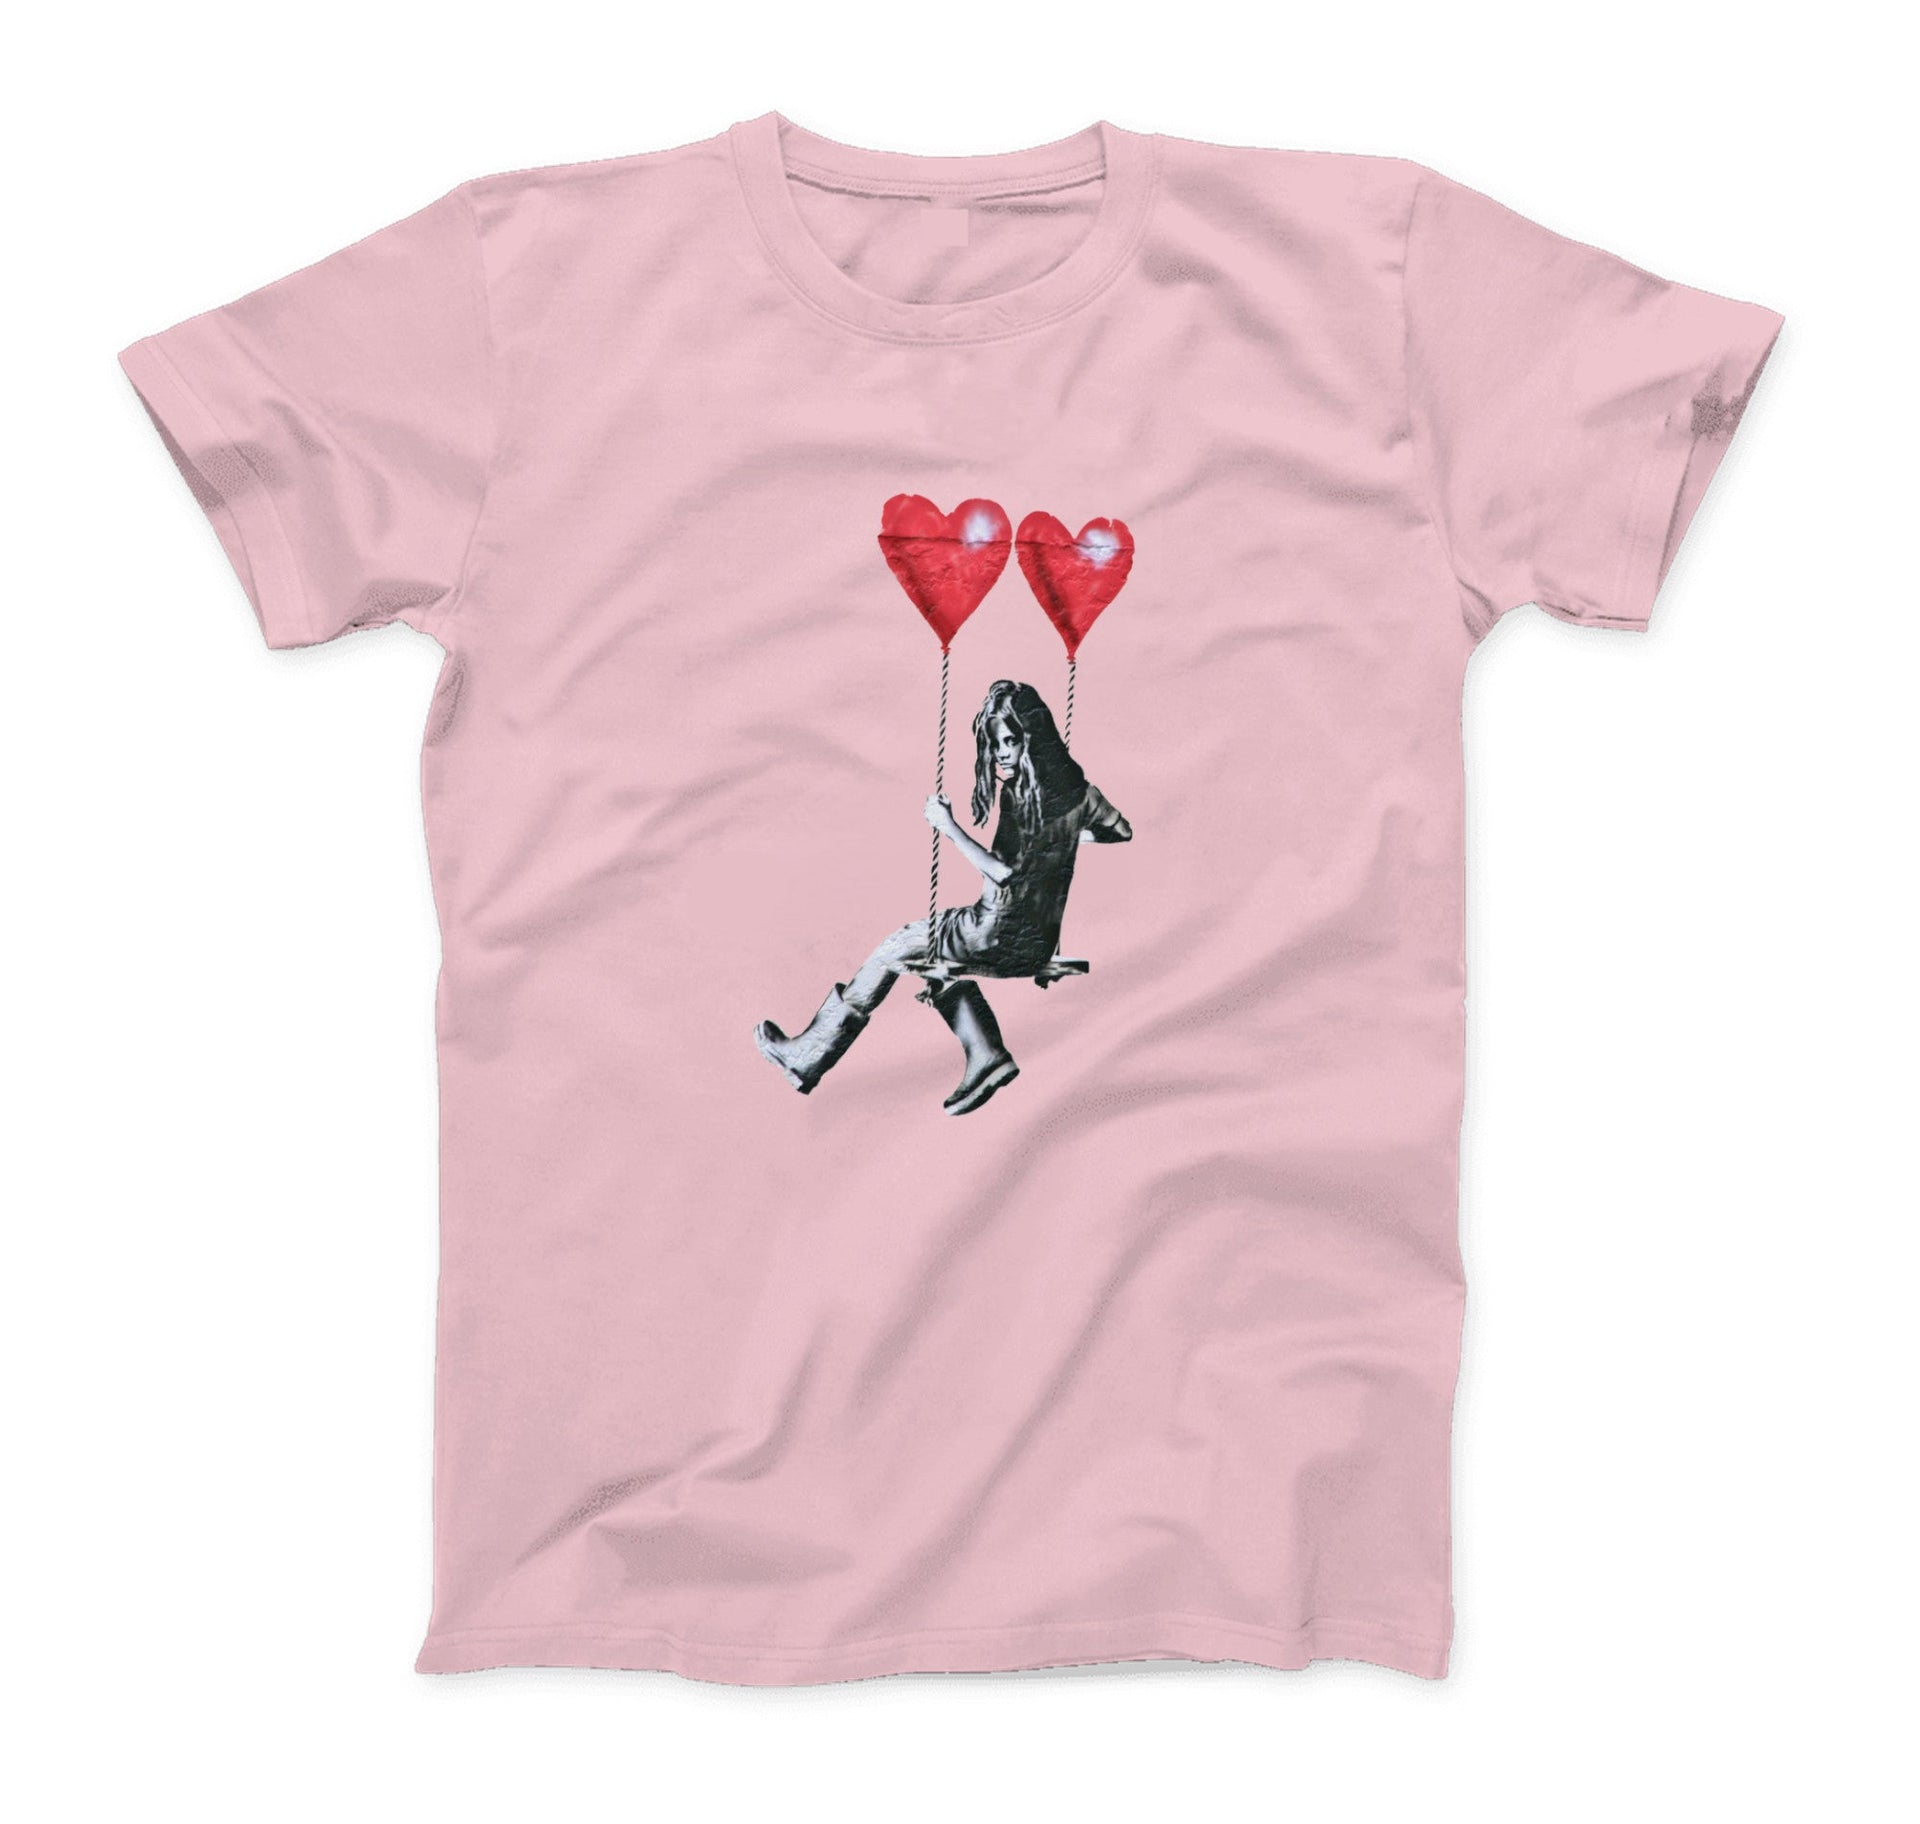 Banksy Girl On Balloon Swing Graffiti Art T-shirt - Clothing - Harvey Ltd